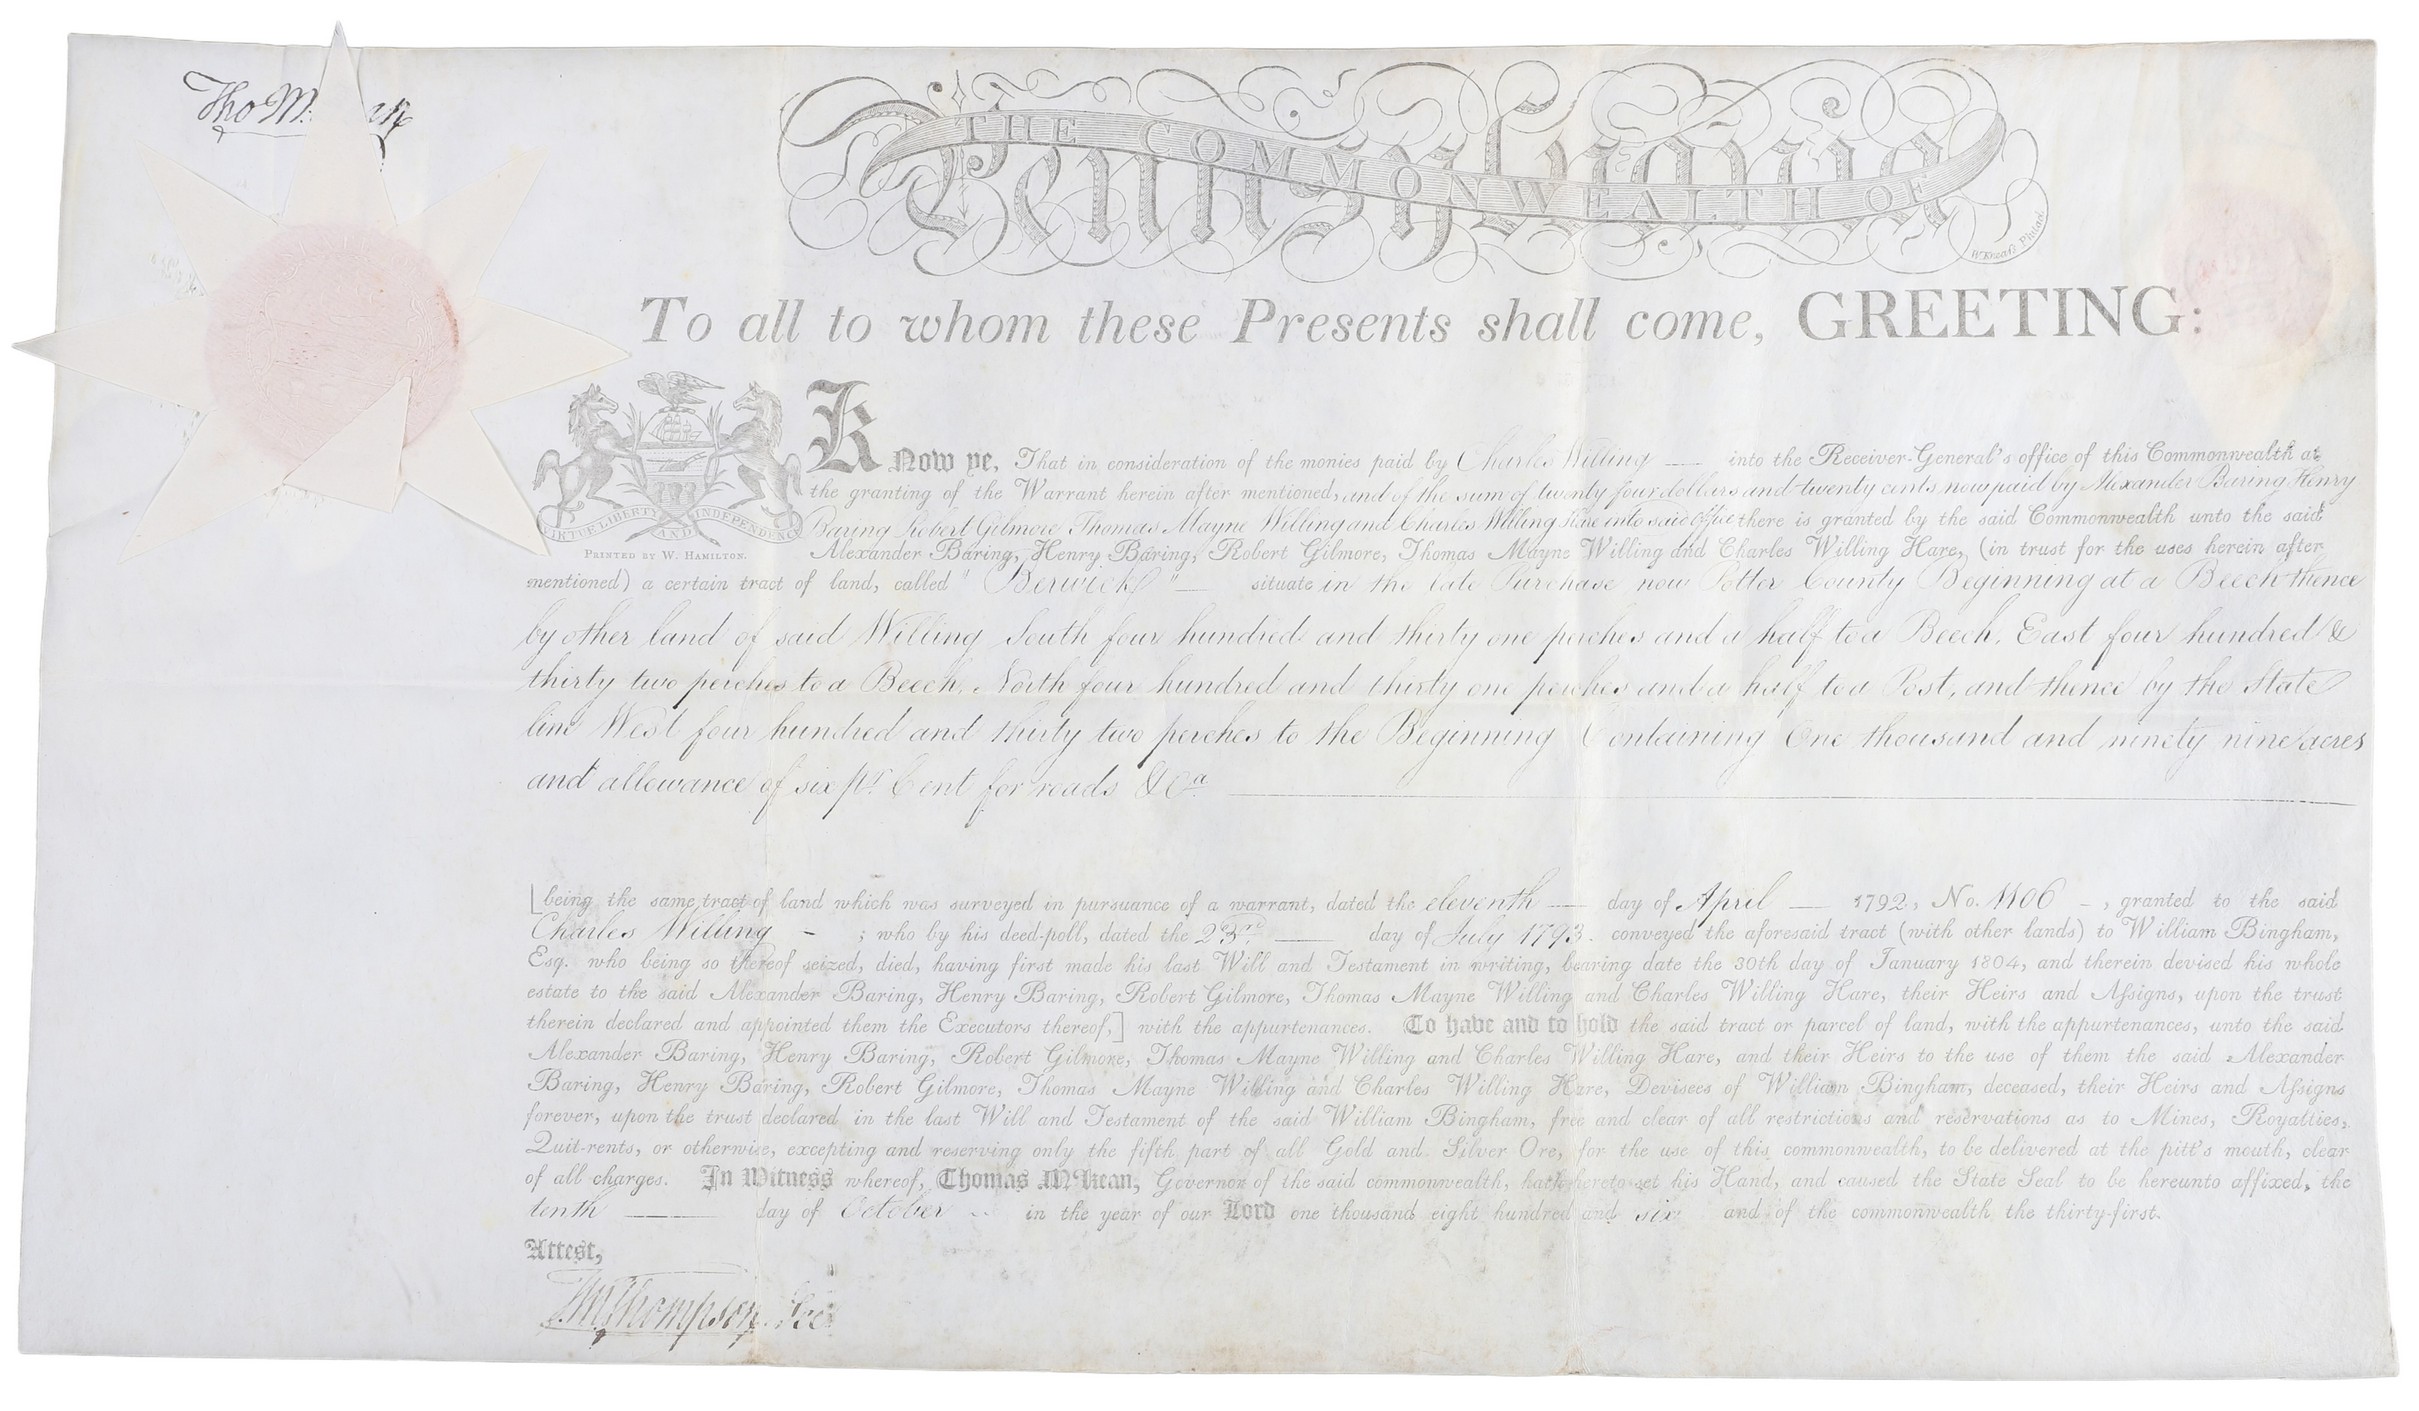 A Pennsylvania land grant on parchment